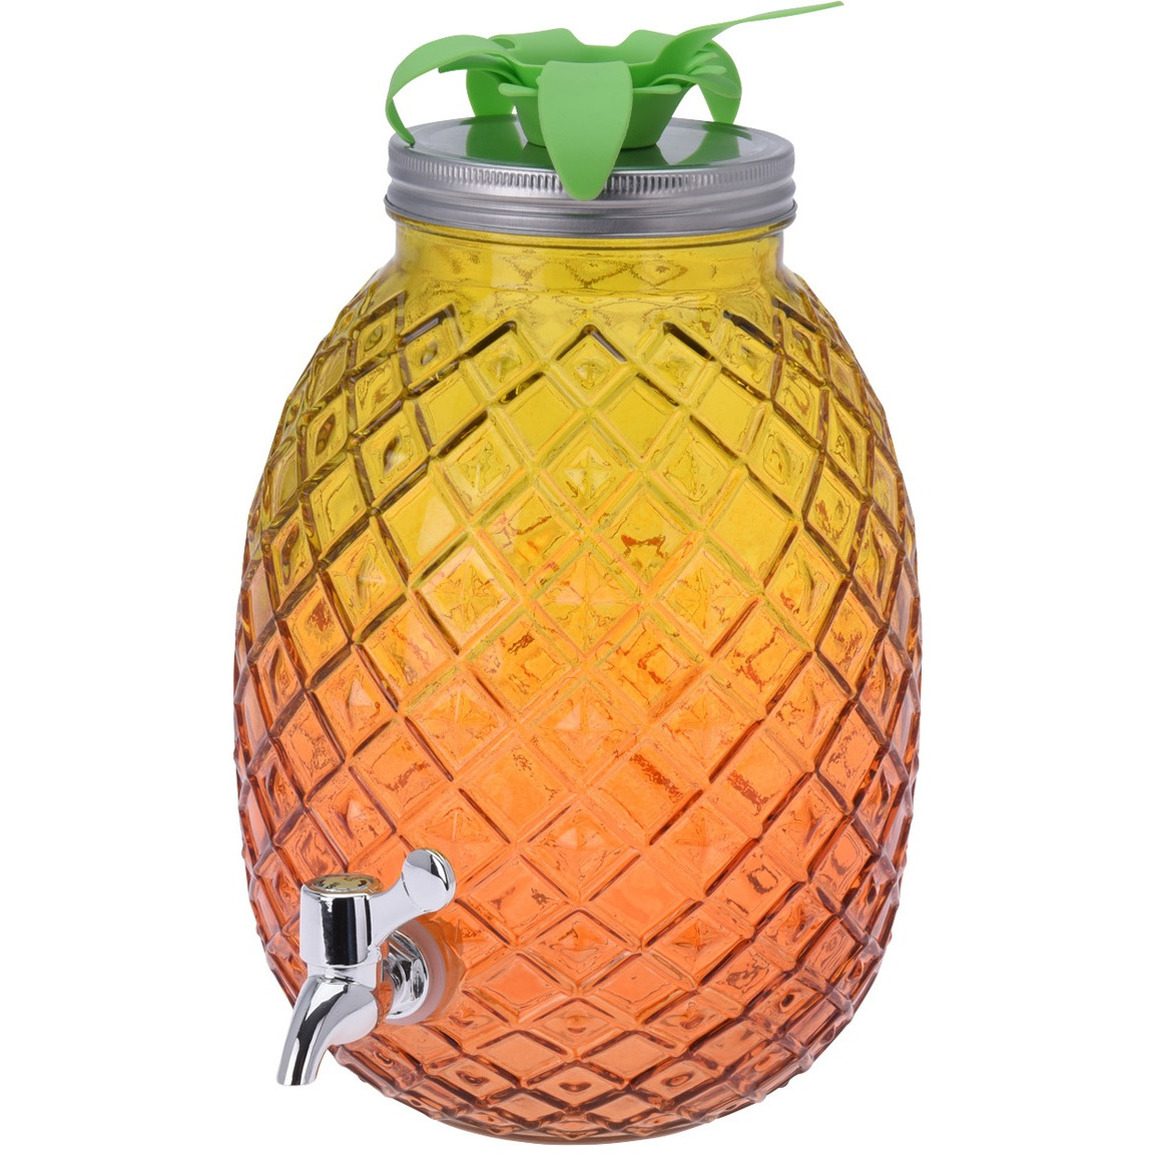 Glazen water-limonade-drank dispenser ananas geel-oranje 4,7 liter